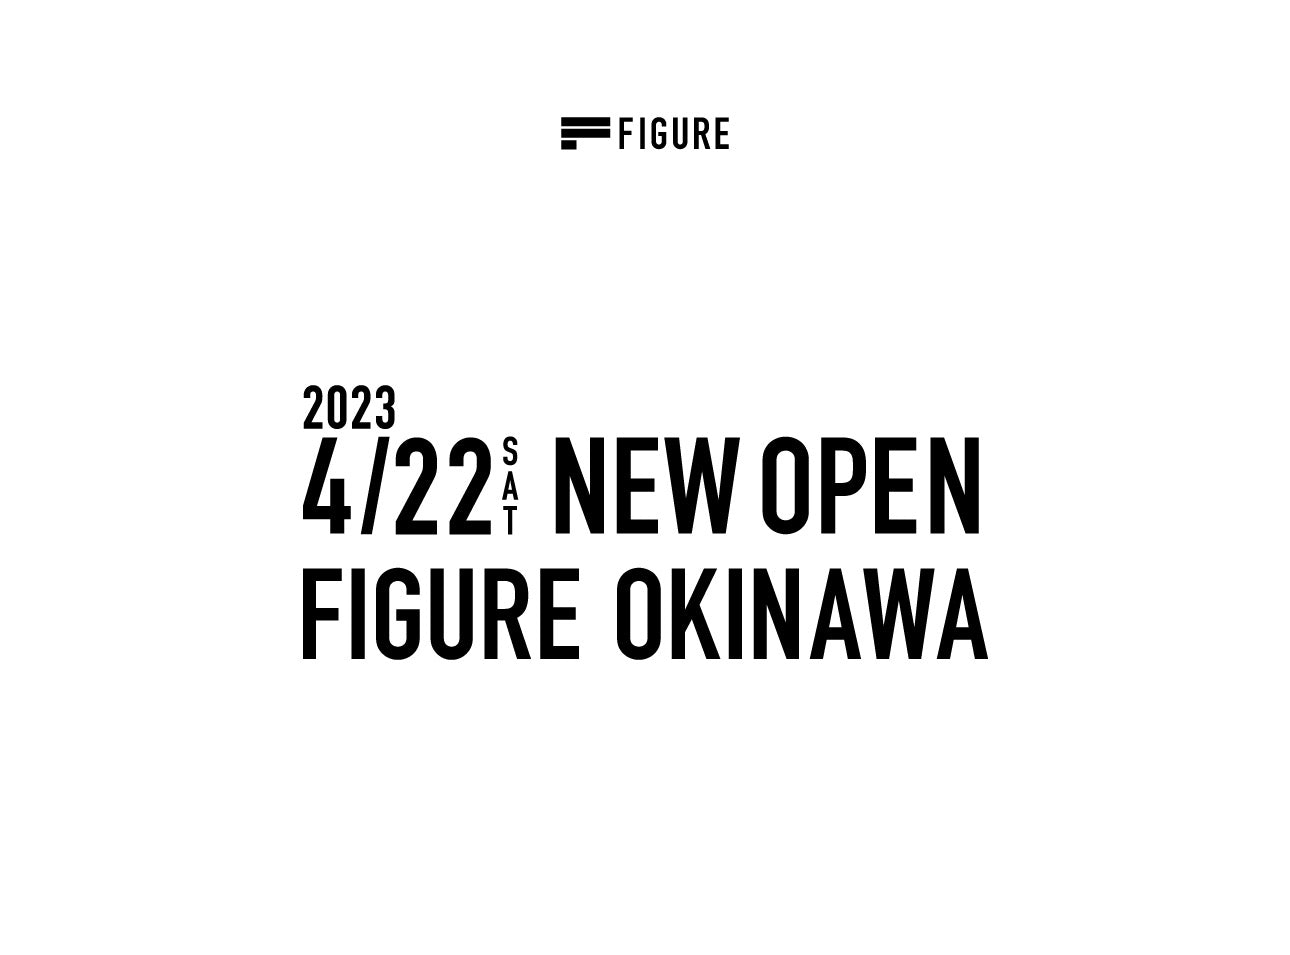 NEW OPEN! FIGURE OKINAWA